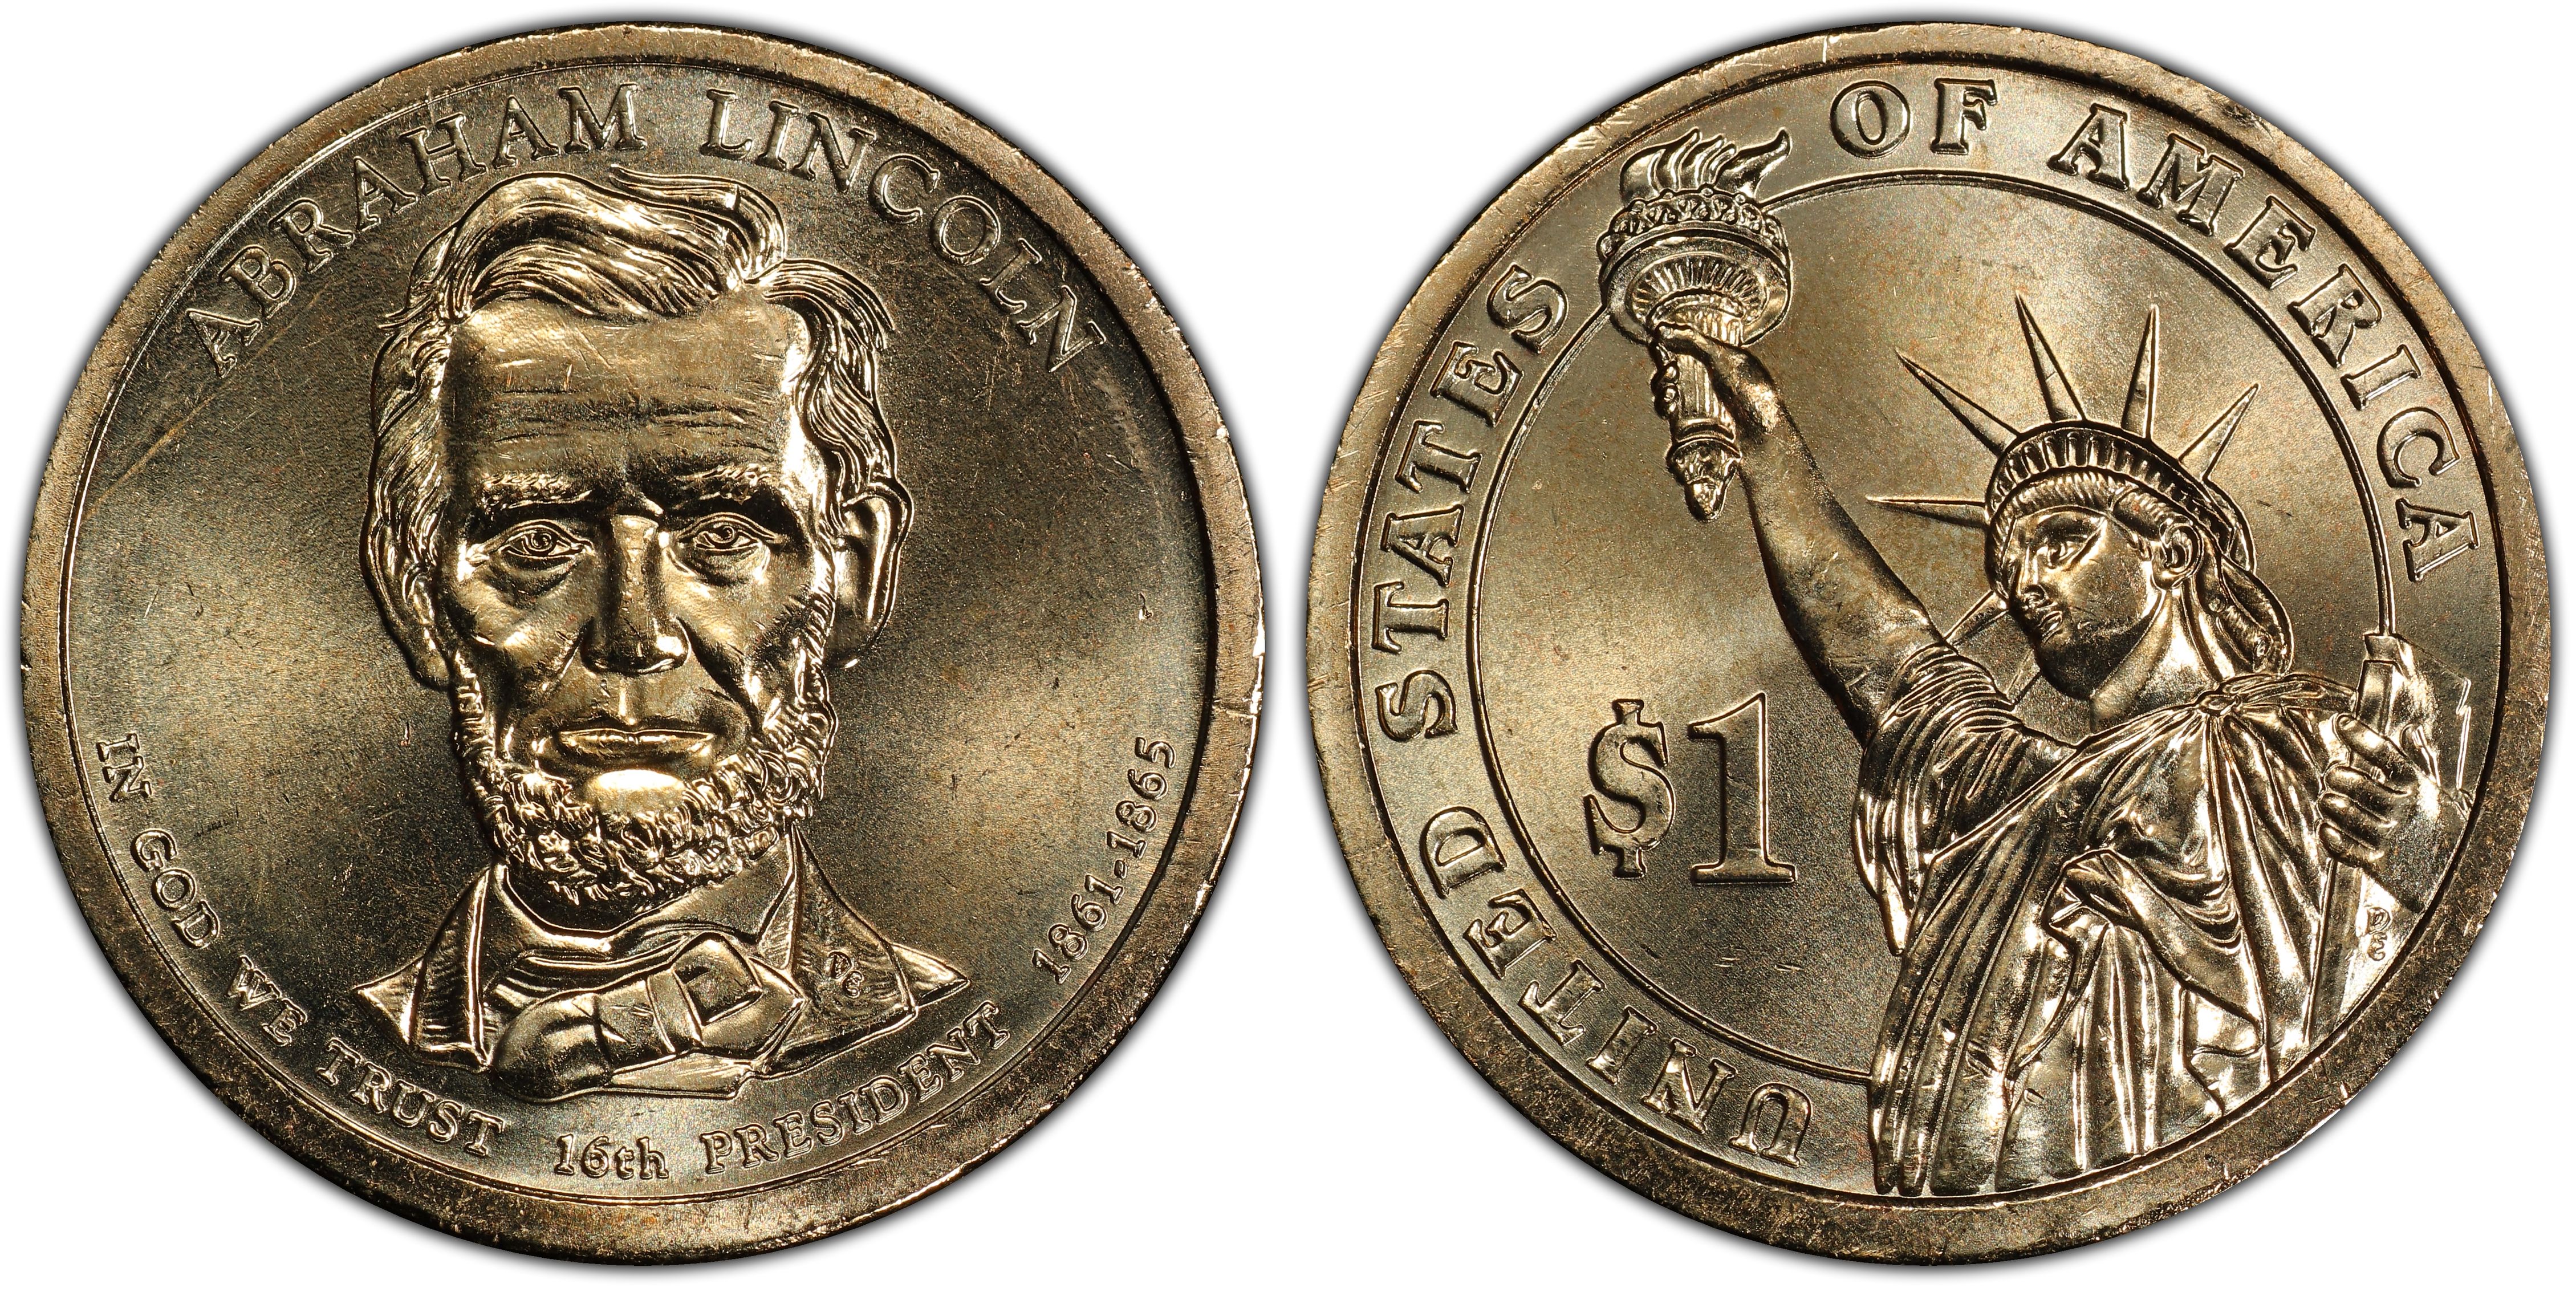 2010-P $1 Abraham Lincoln Brilliant Uncirculated 16TH Presidential Dollar Coin!